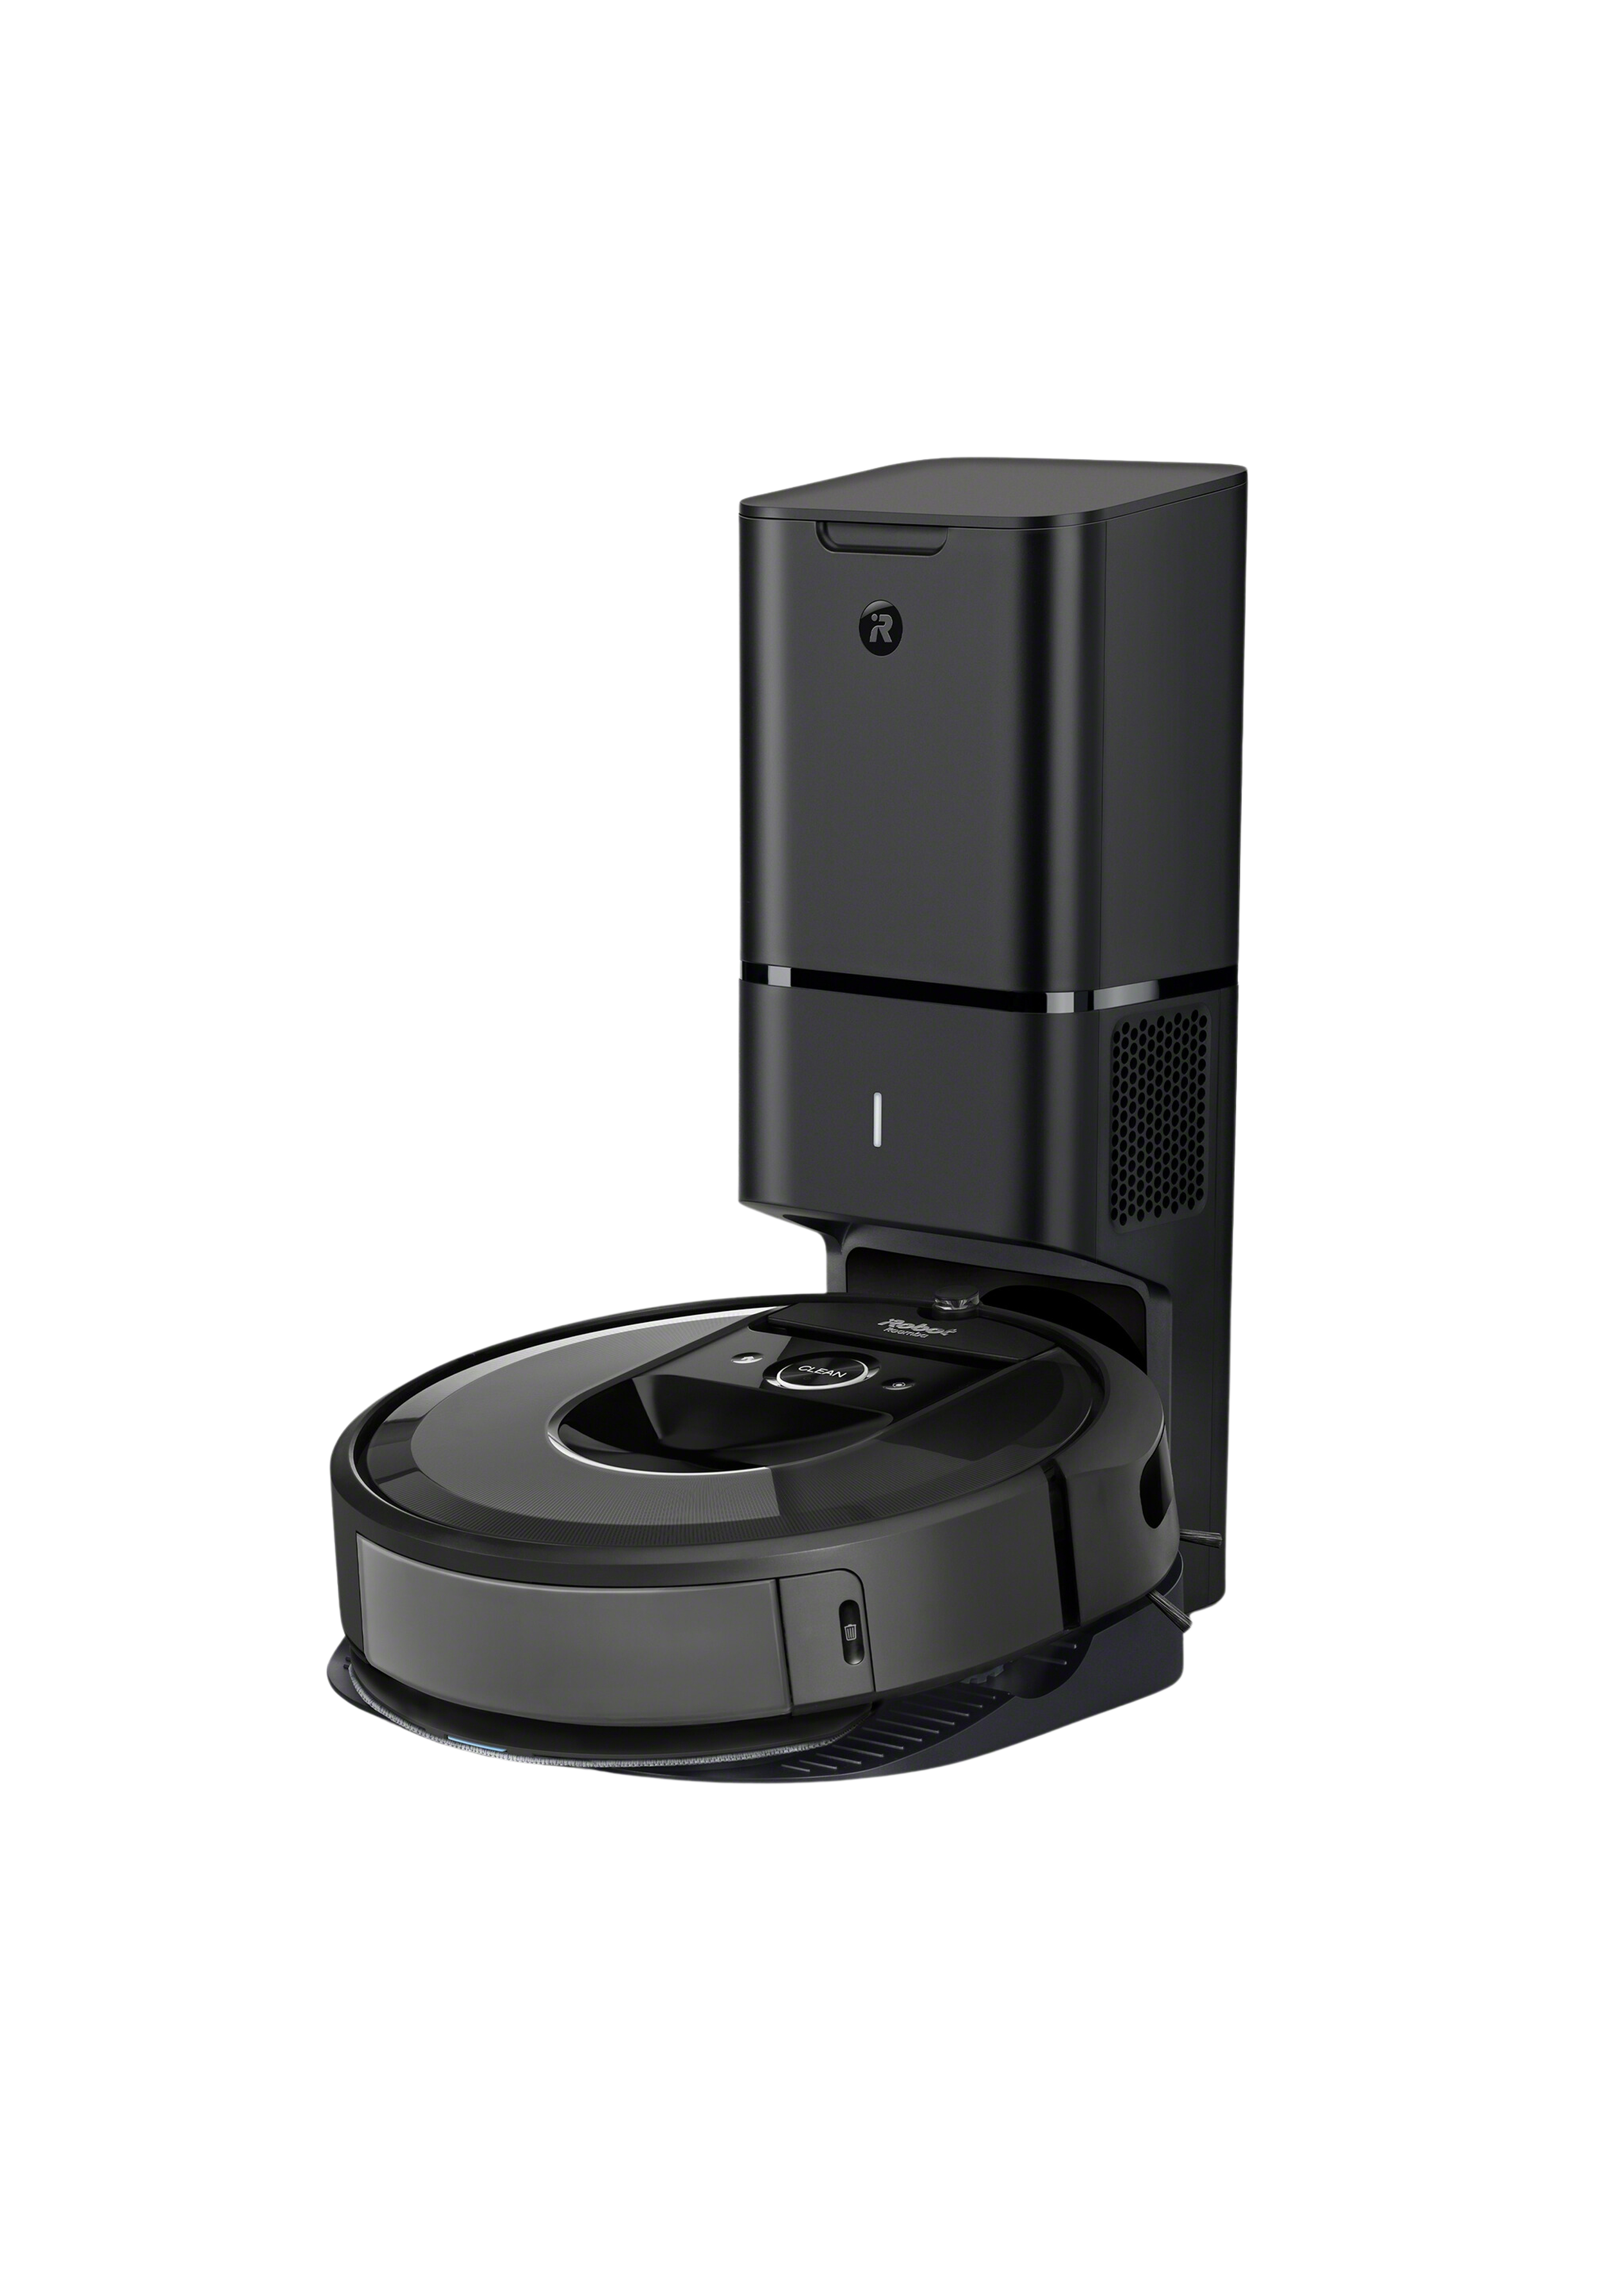 Rent iRobot Roomba J7 (J7158) Robot Vacuum from €24.90 per month